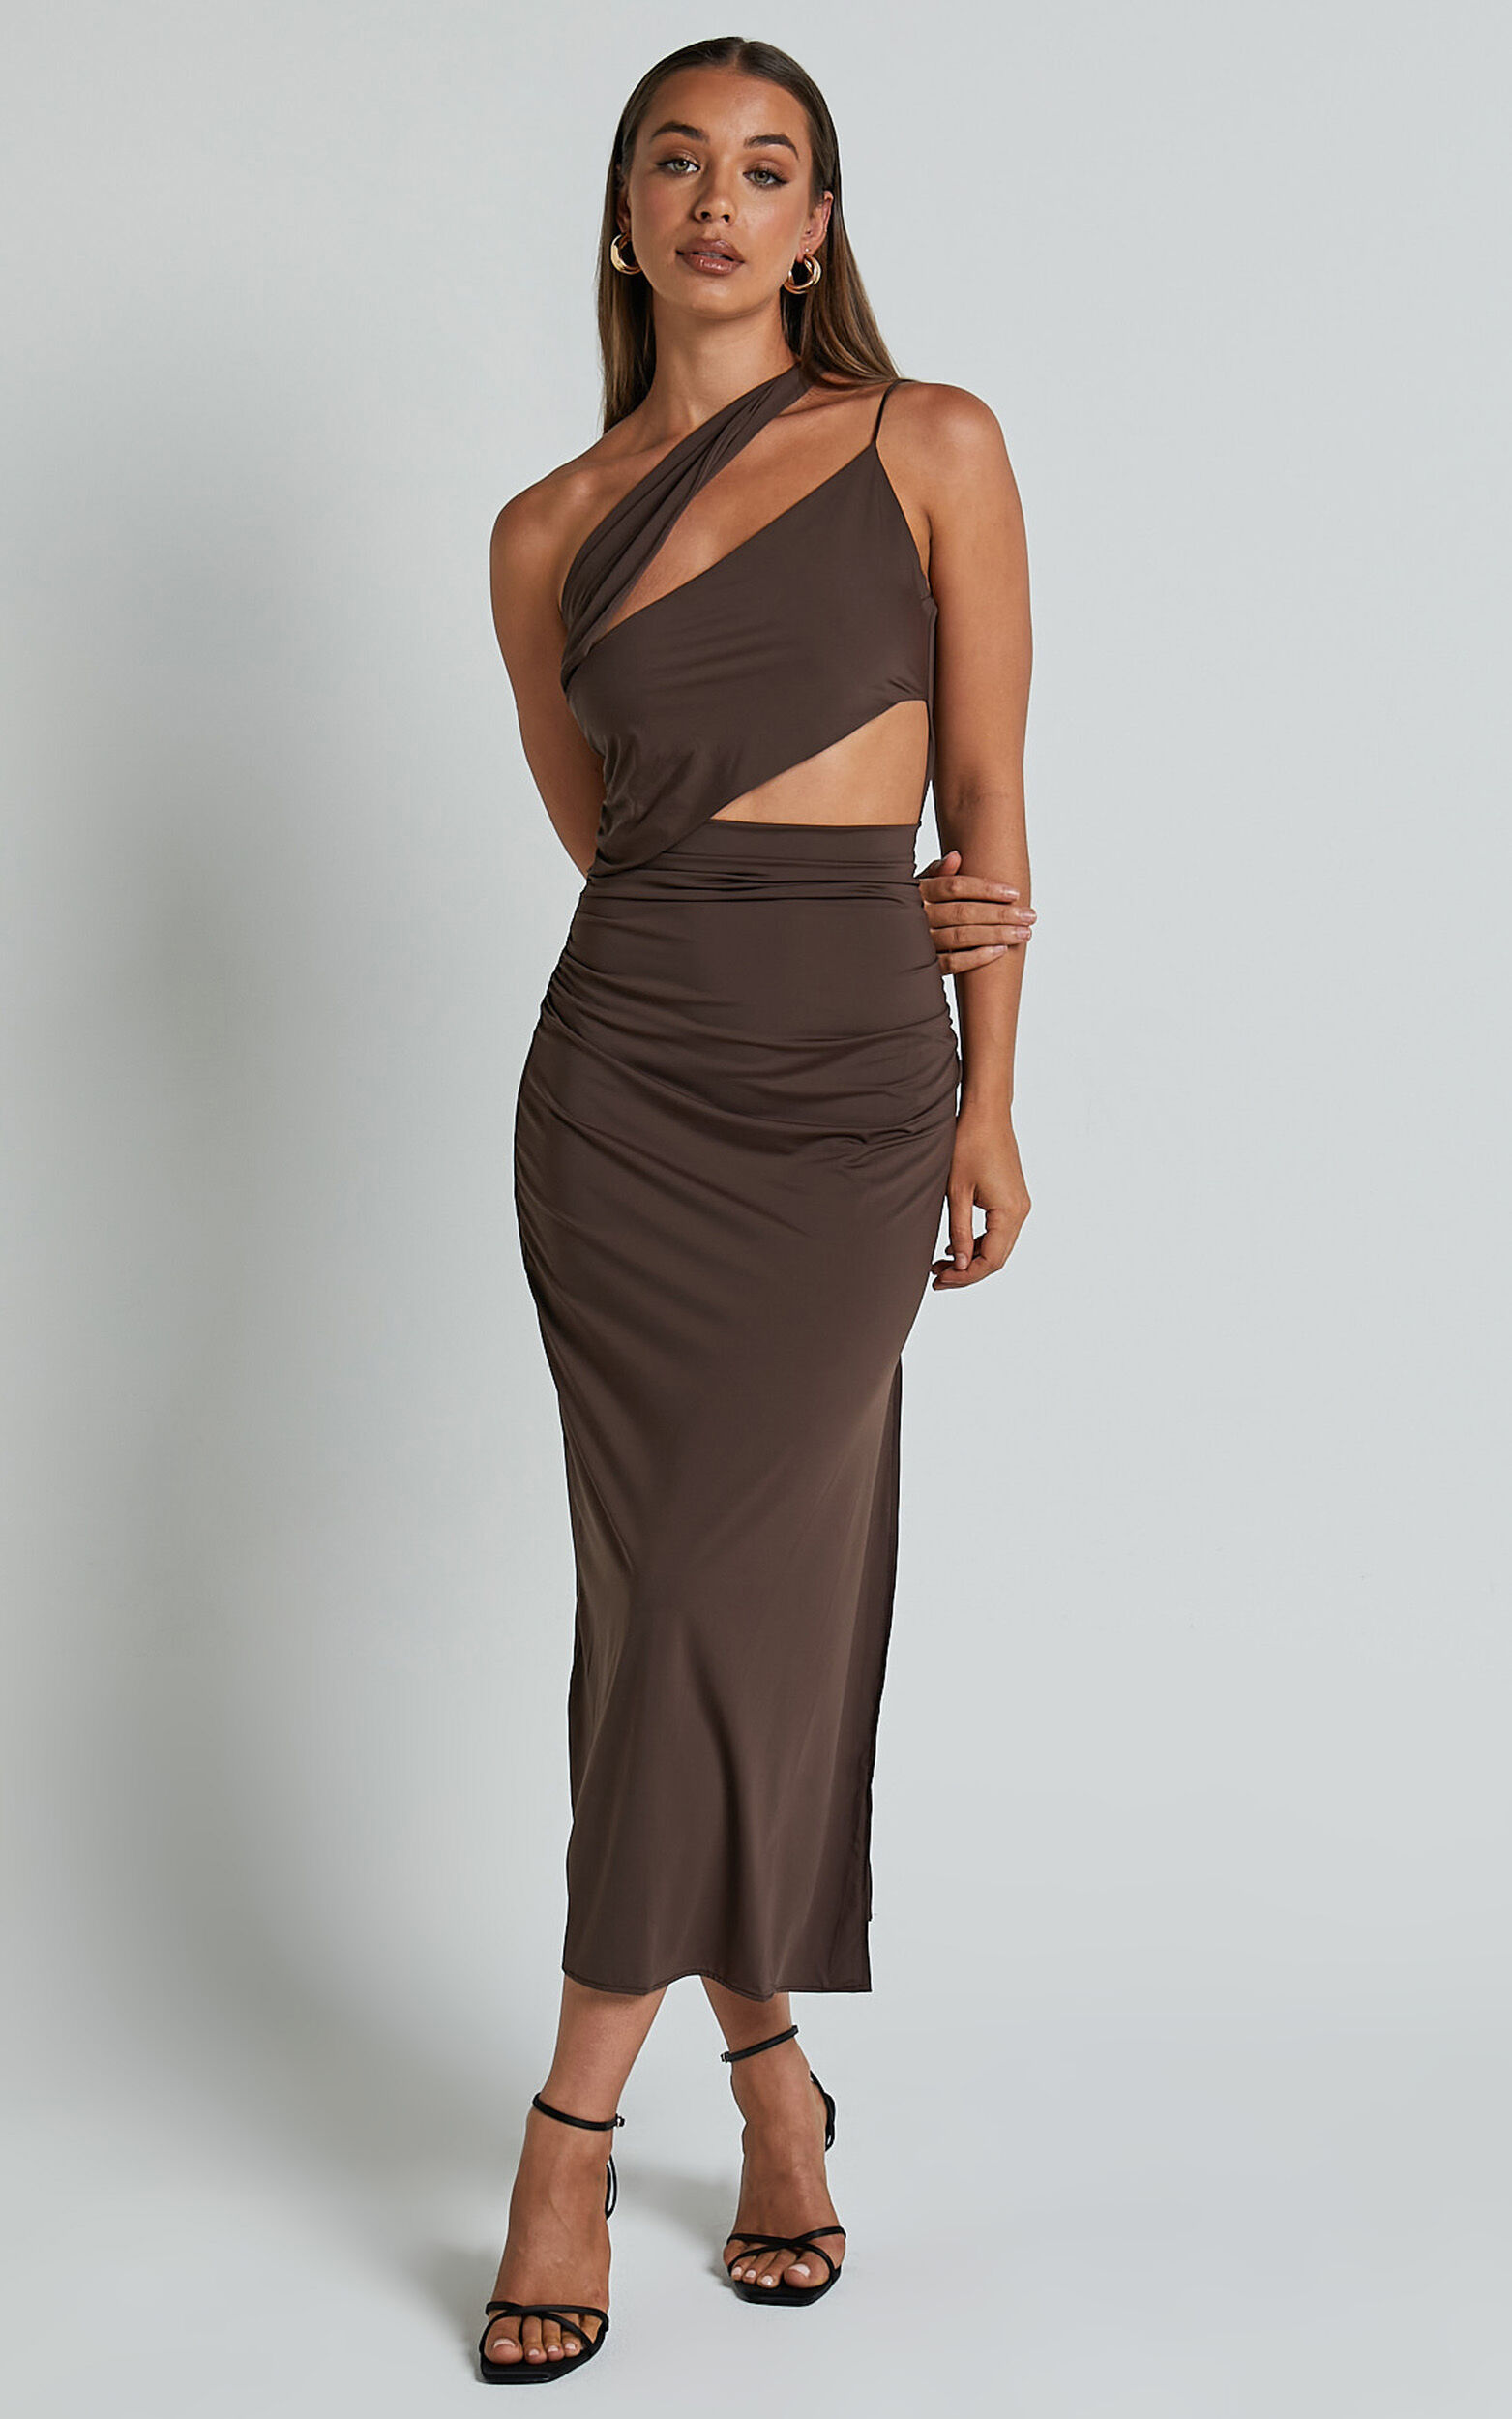 Erizha Midi Dress - One Shoulder Strappy Ruched Slip Dress in Chocolate - L, BRN1